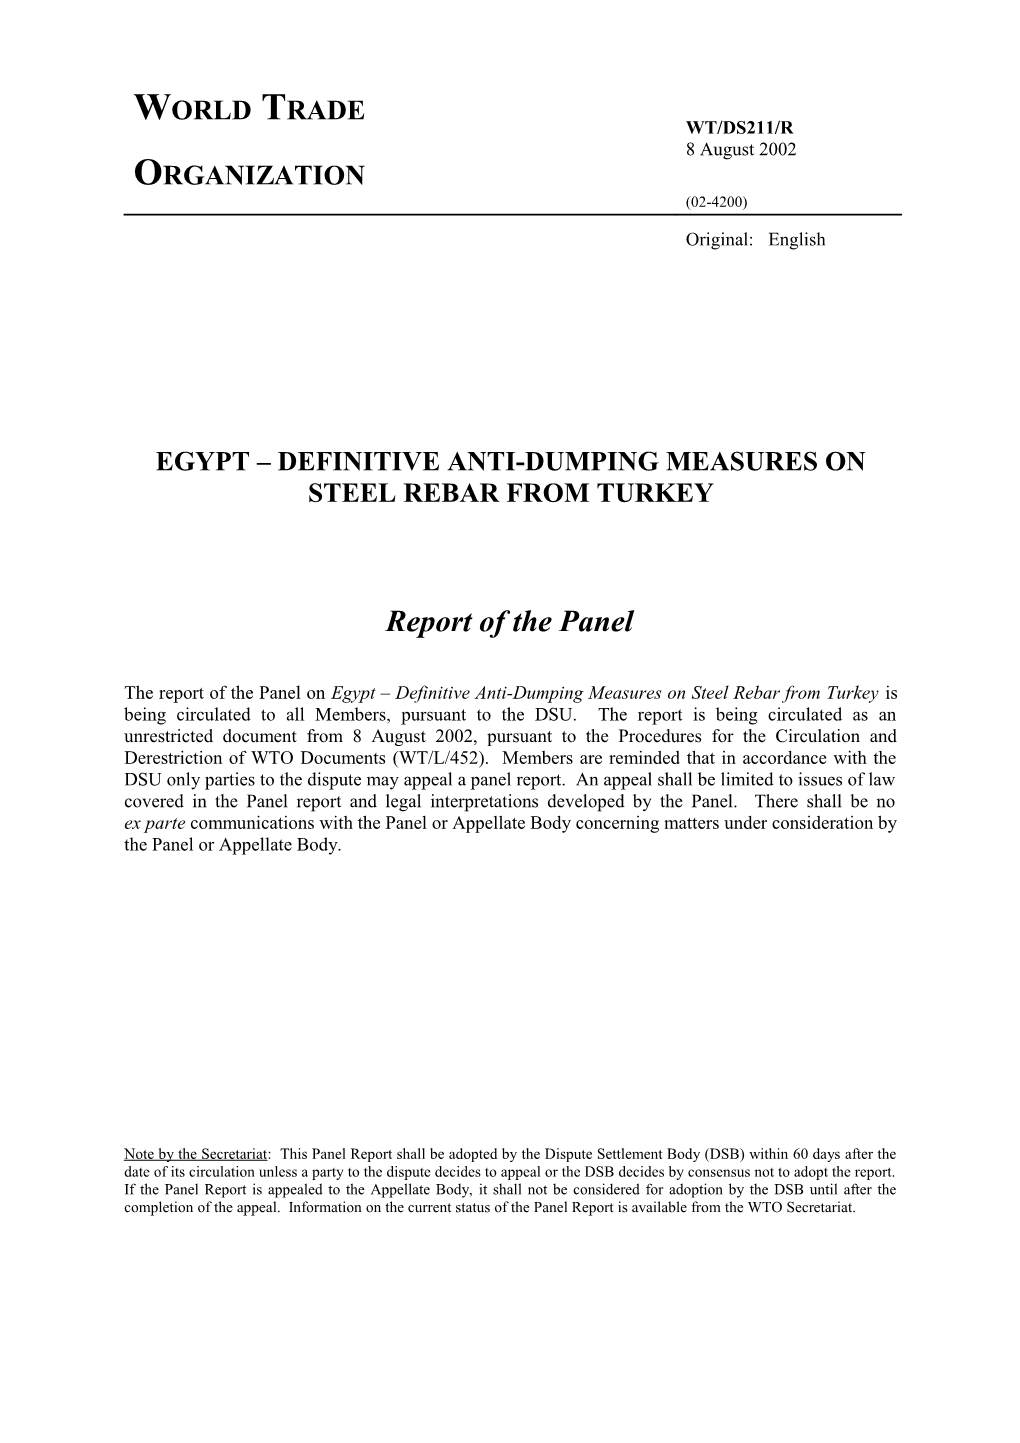 Egypt Definitive Anti-Dumping Measures on Steel Rebar from Turkey